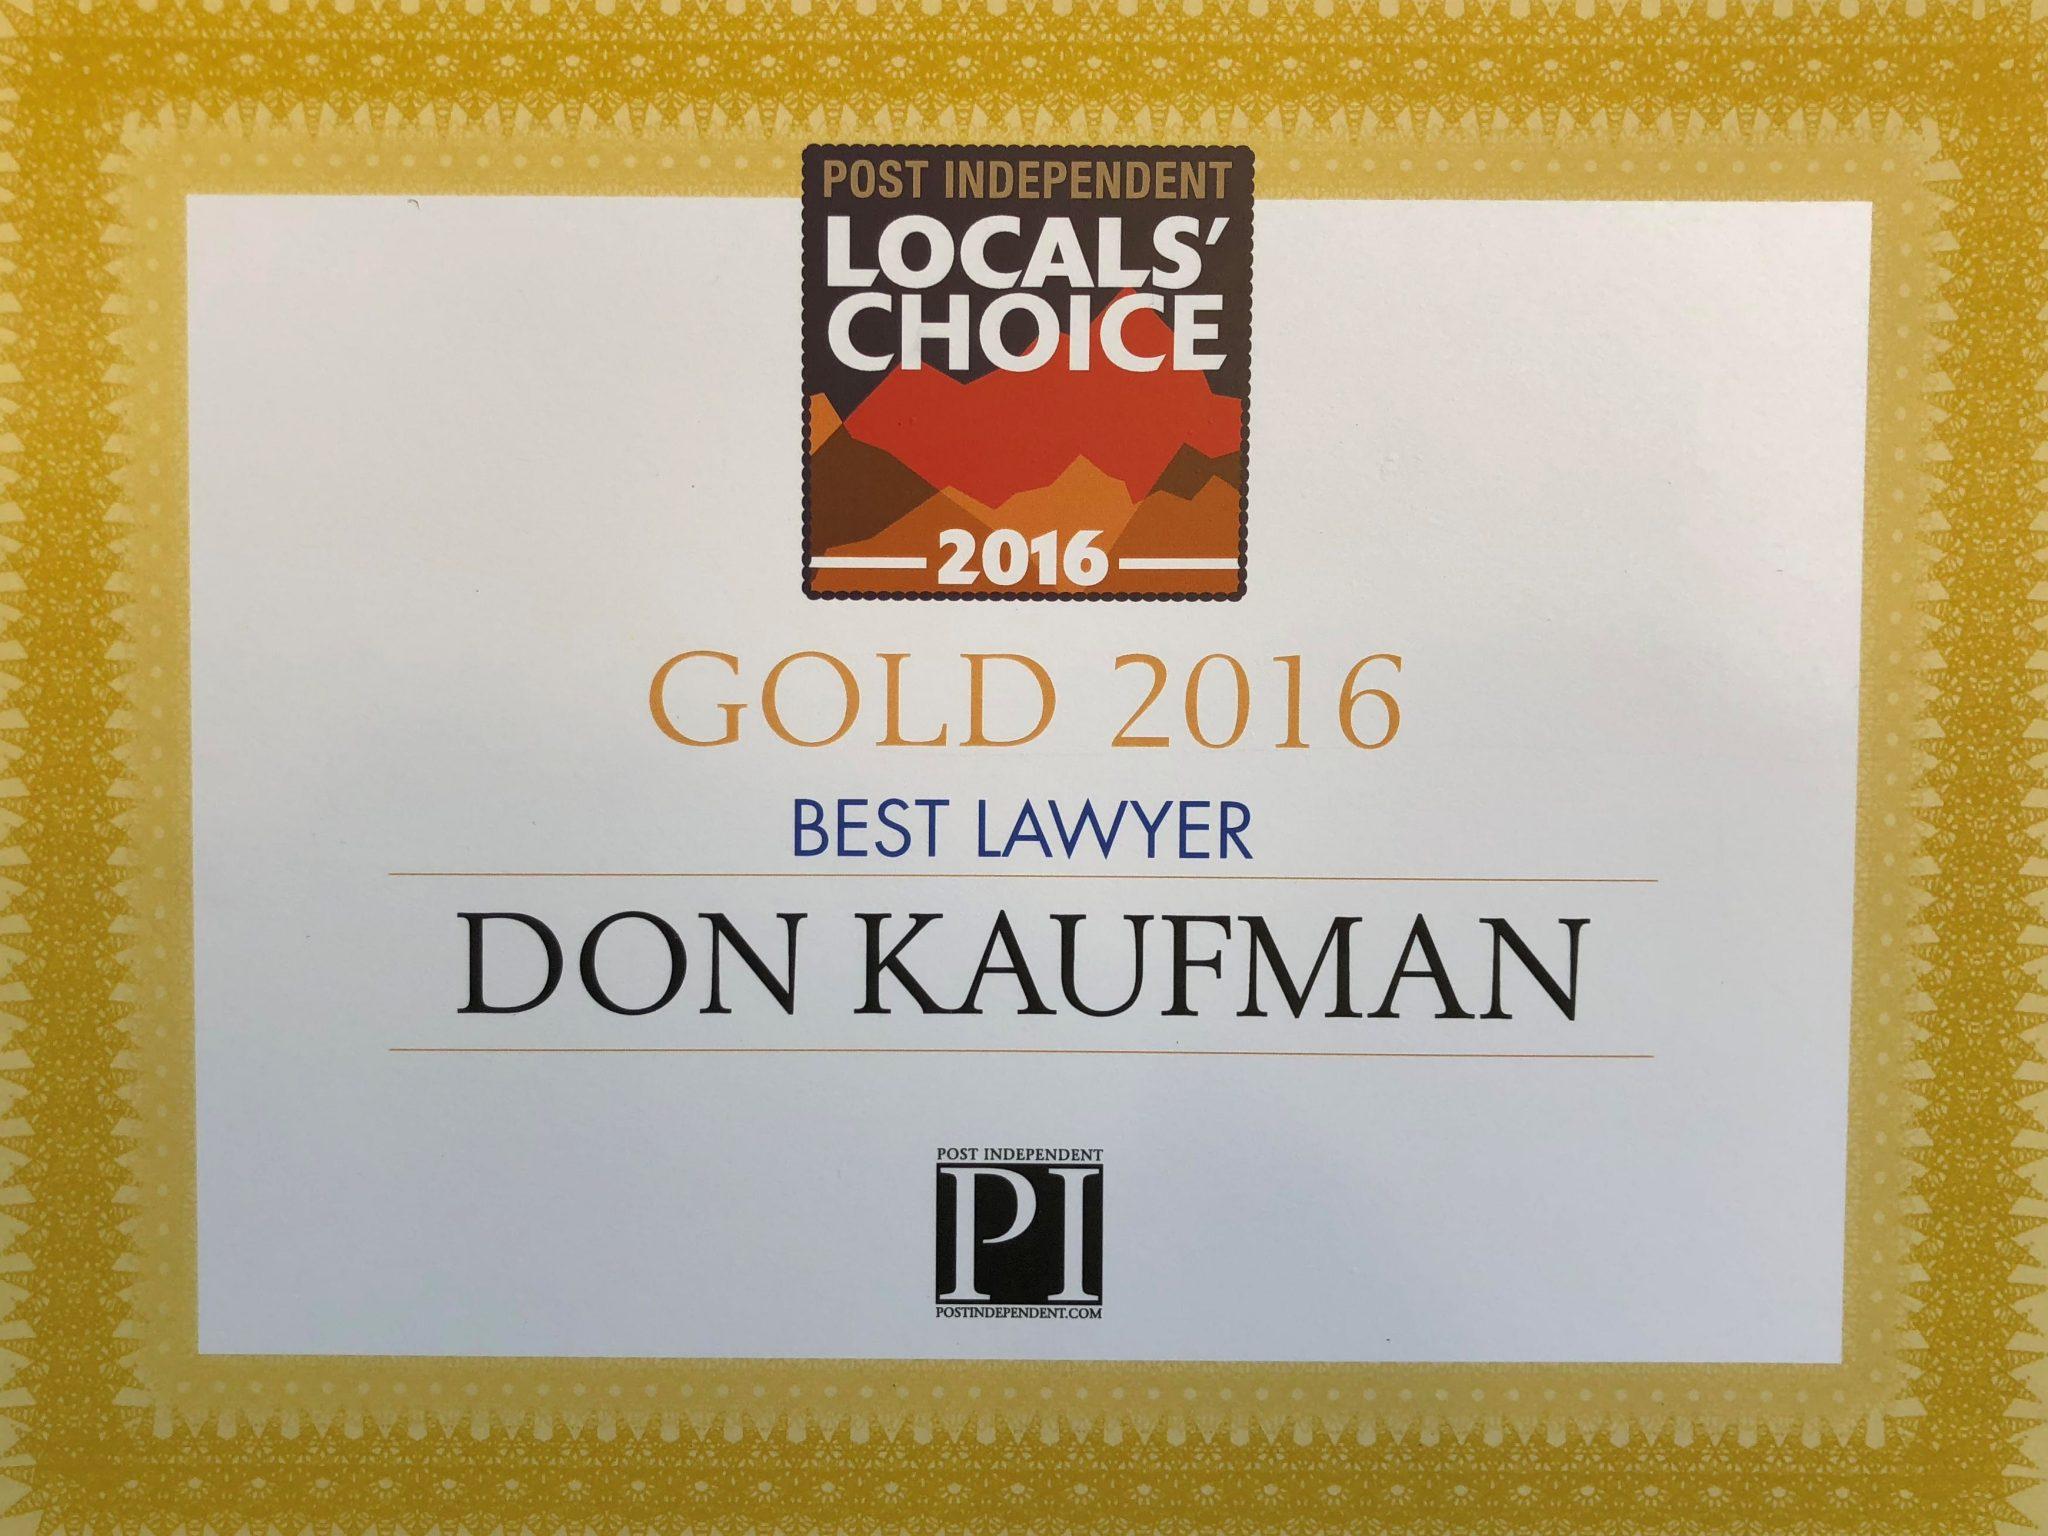 Don Kaufman Wins 2016 Locals Choice Award